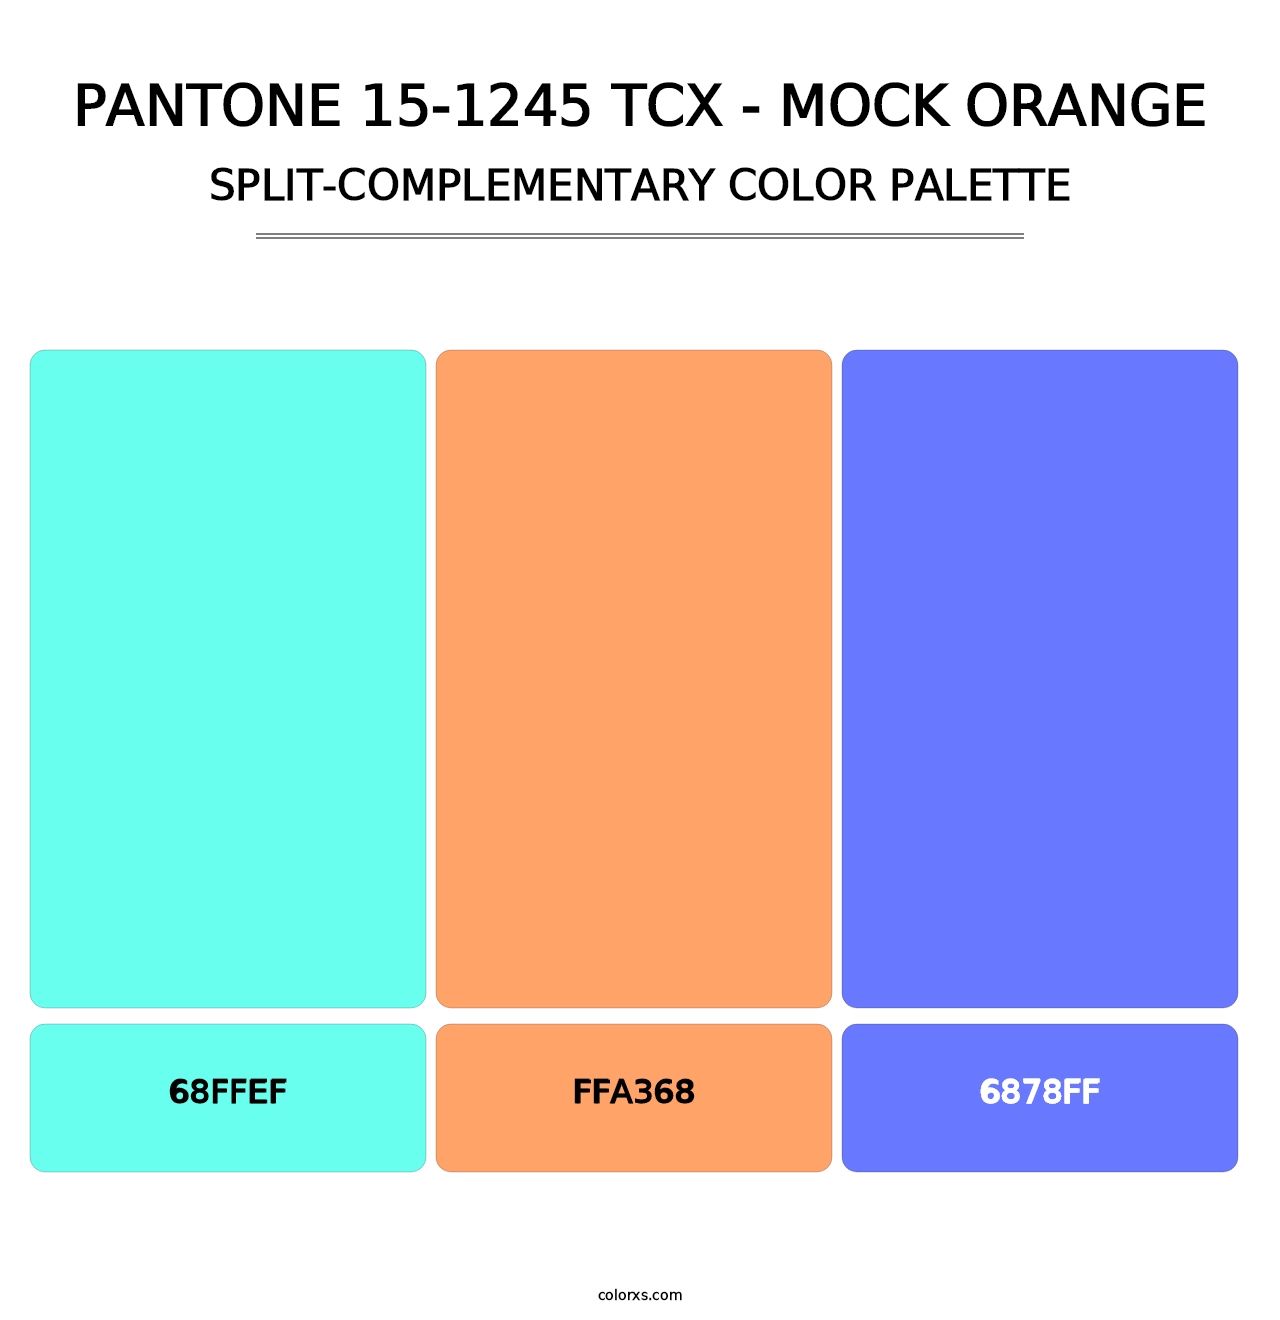 PANTONE 15-1245 TCX - Mock Orange - Split-Complementary Color Palette